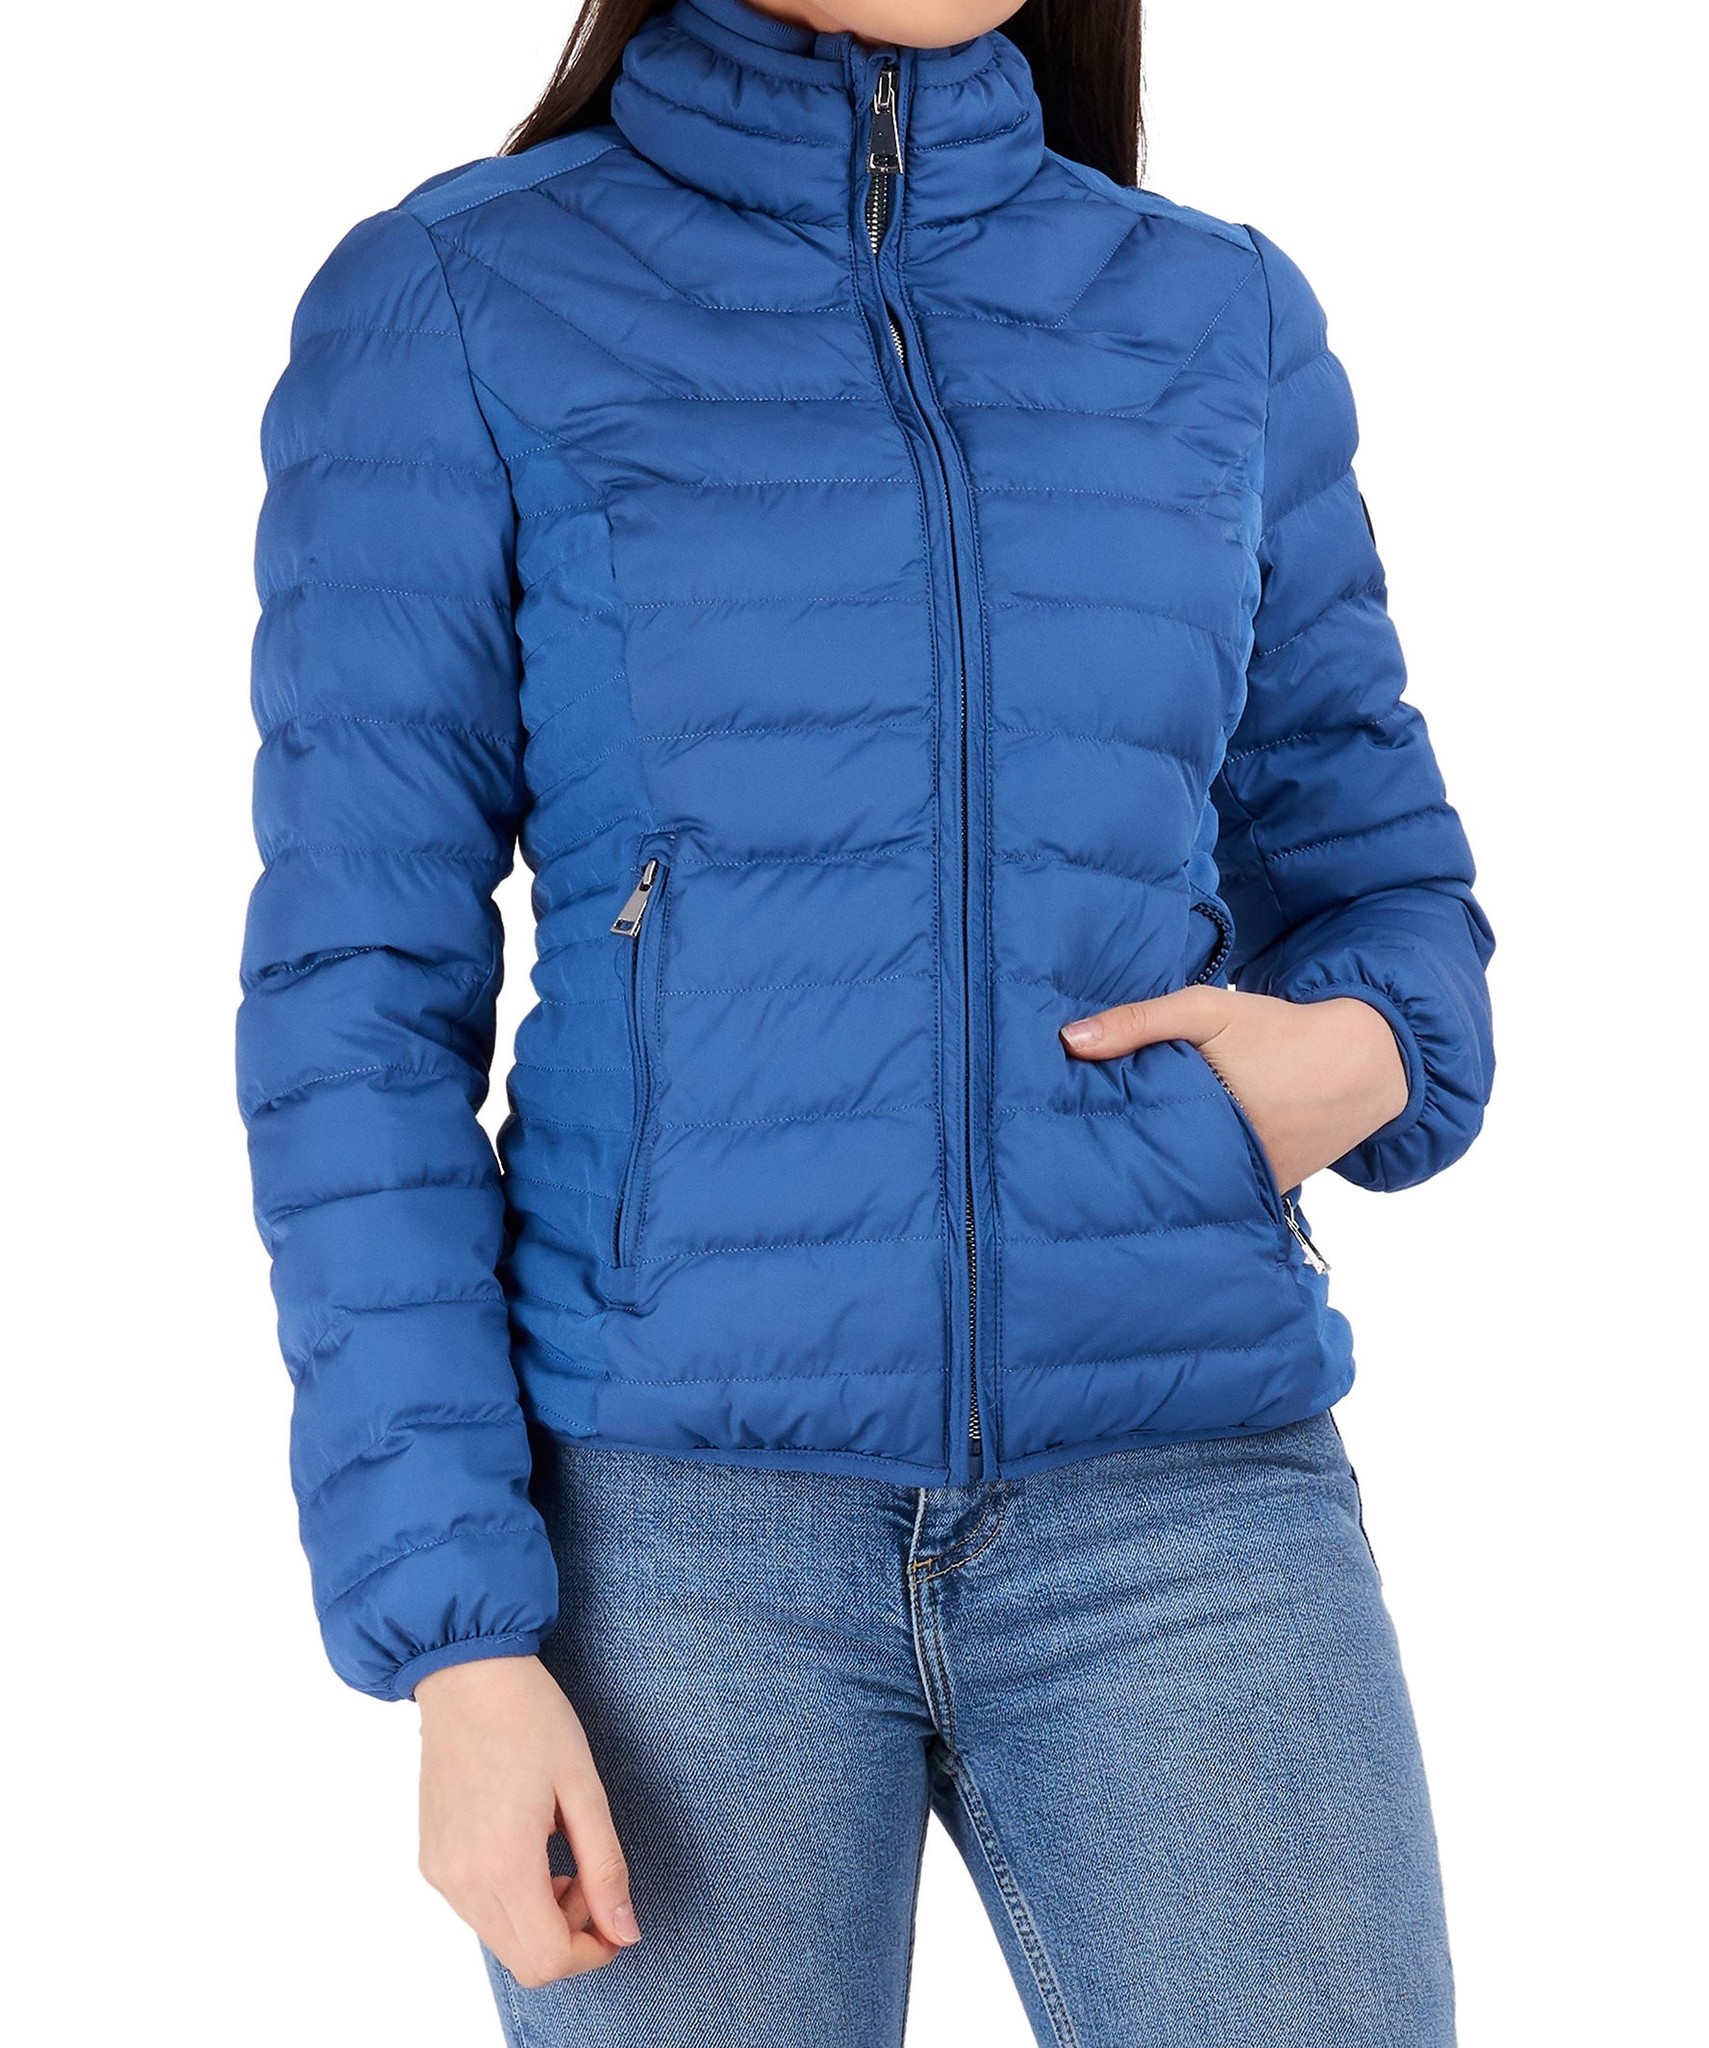 : Sorona Jacket Blu-FRM0501 - Coats